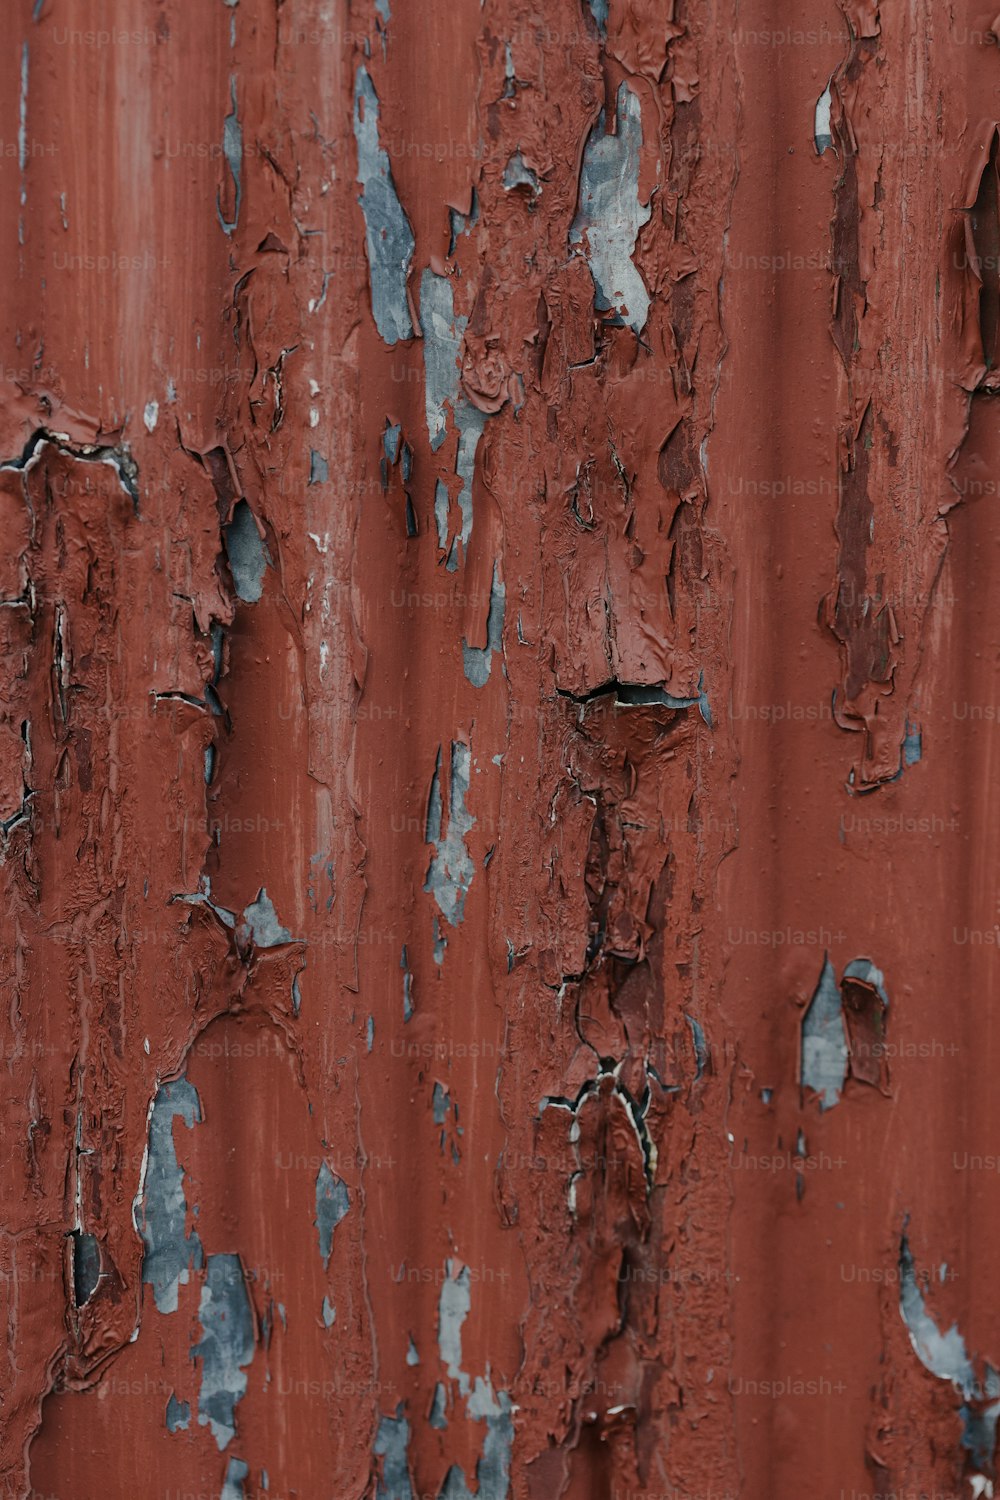 una superficie metallica arrugginita con vernice scrostata